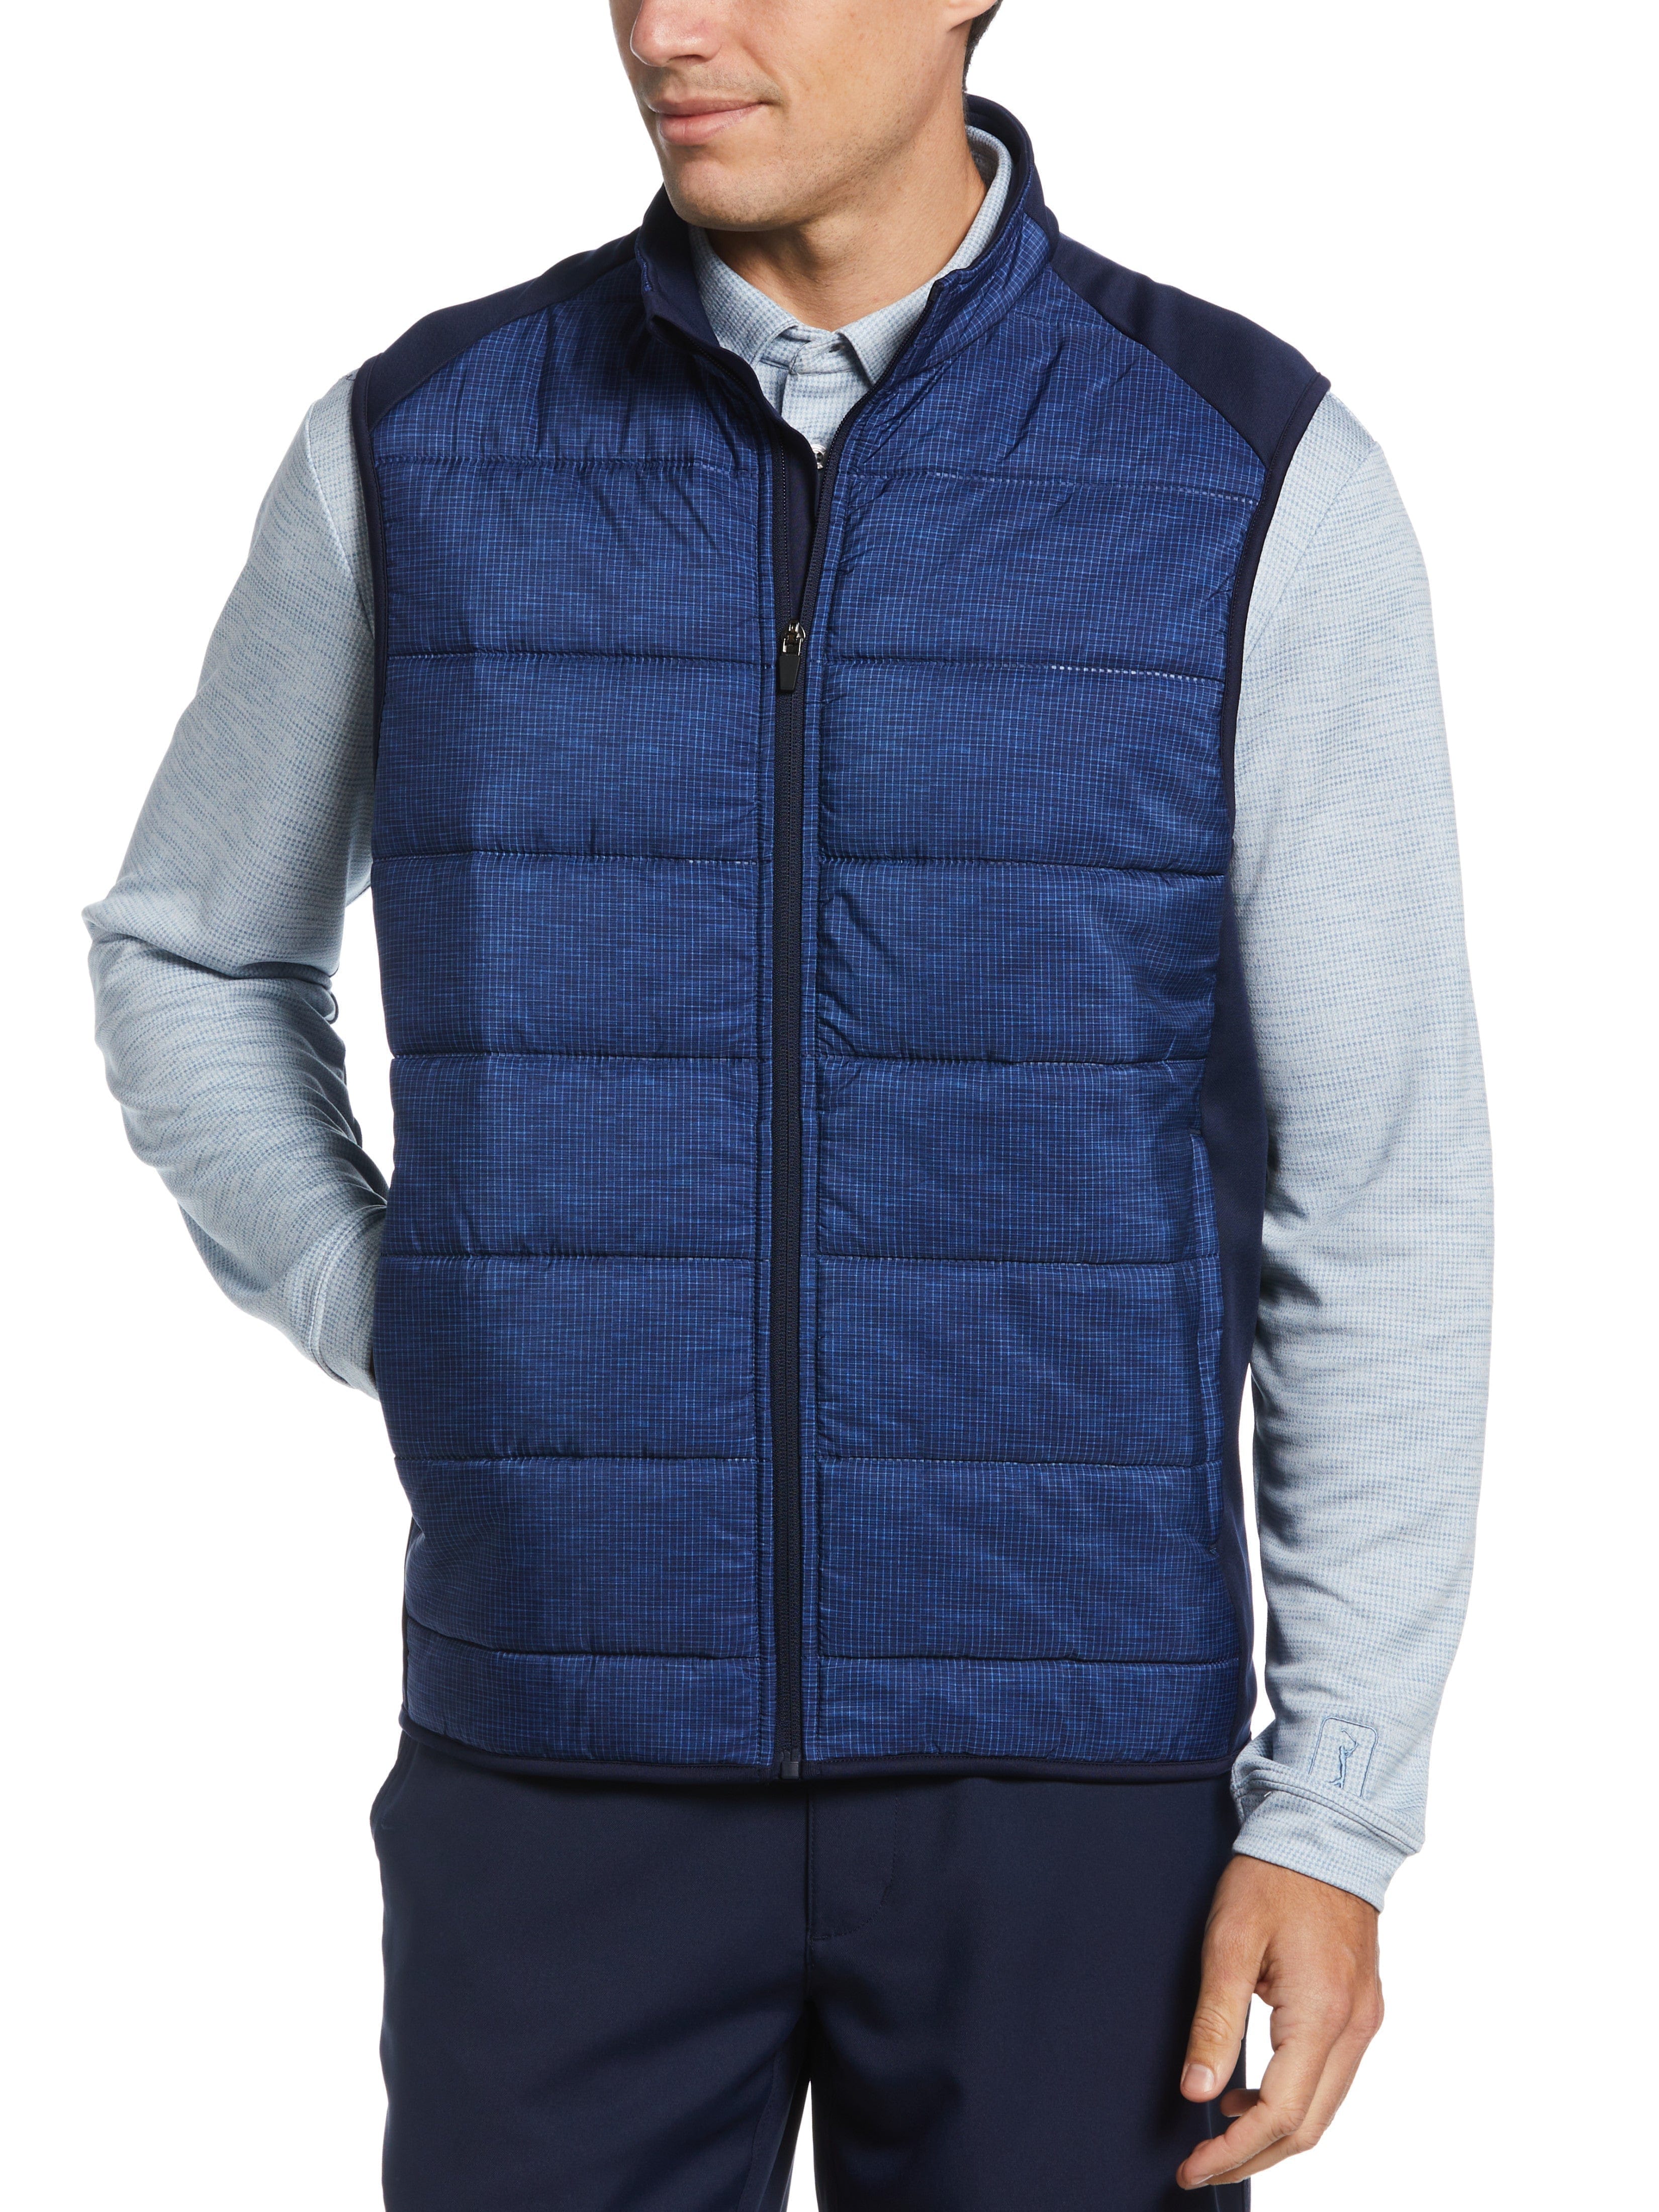 PGA TOUR Apparel Mens Ultrasonic Print Full Zip Golf Vest Jacket Top, Size XL, Navy Blue, 100% Polyester | Golf Apparel Shop